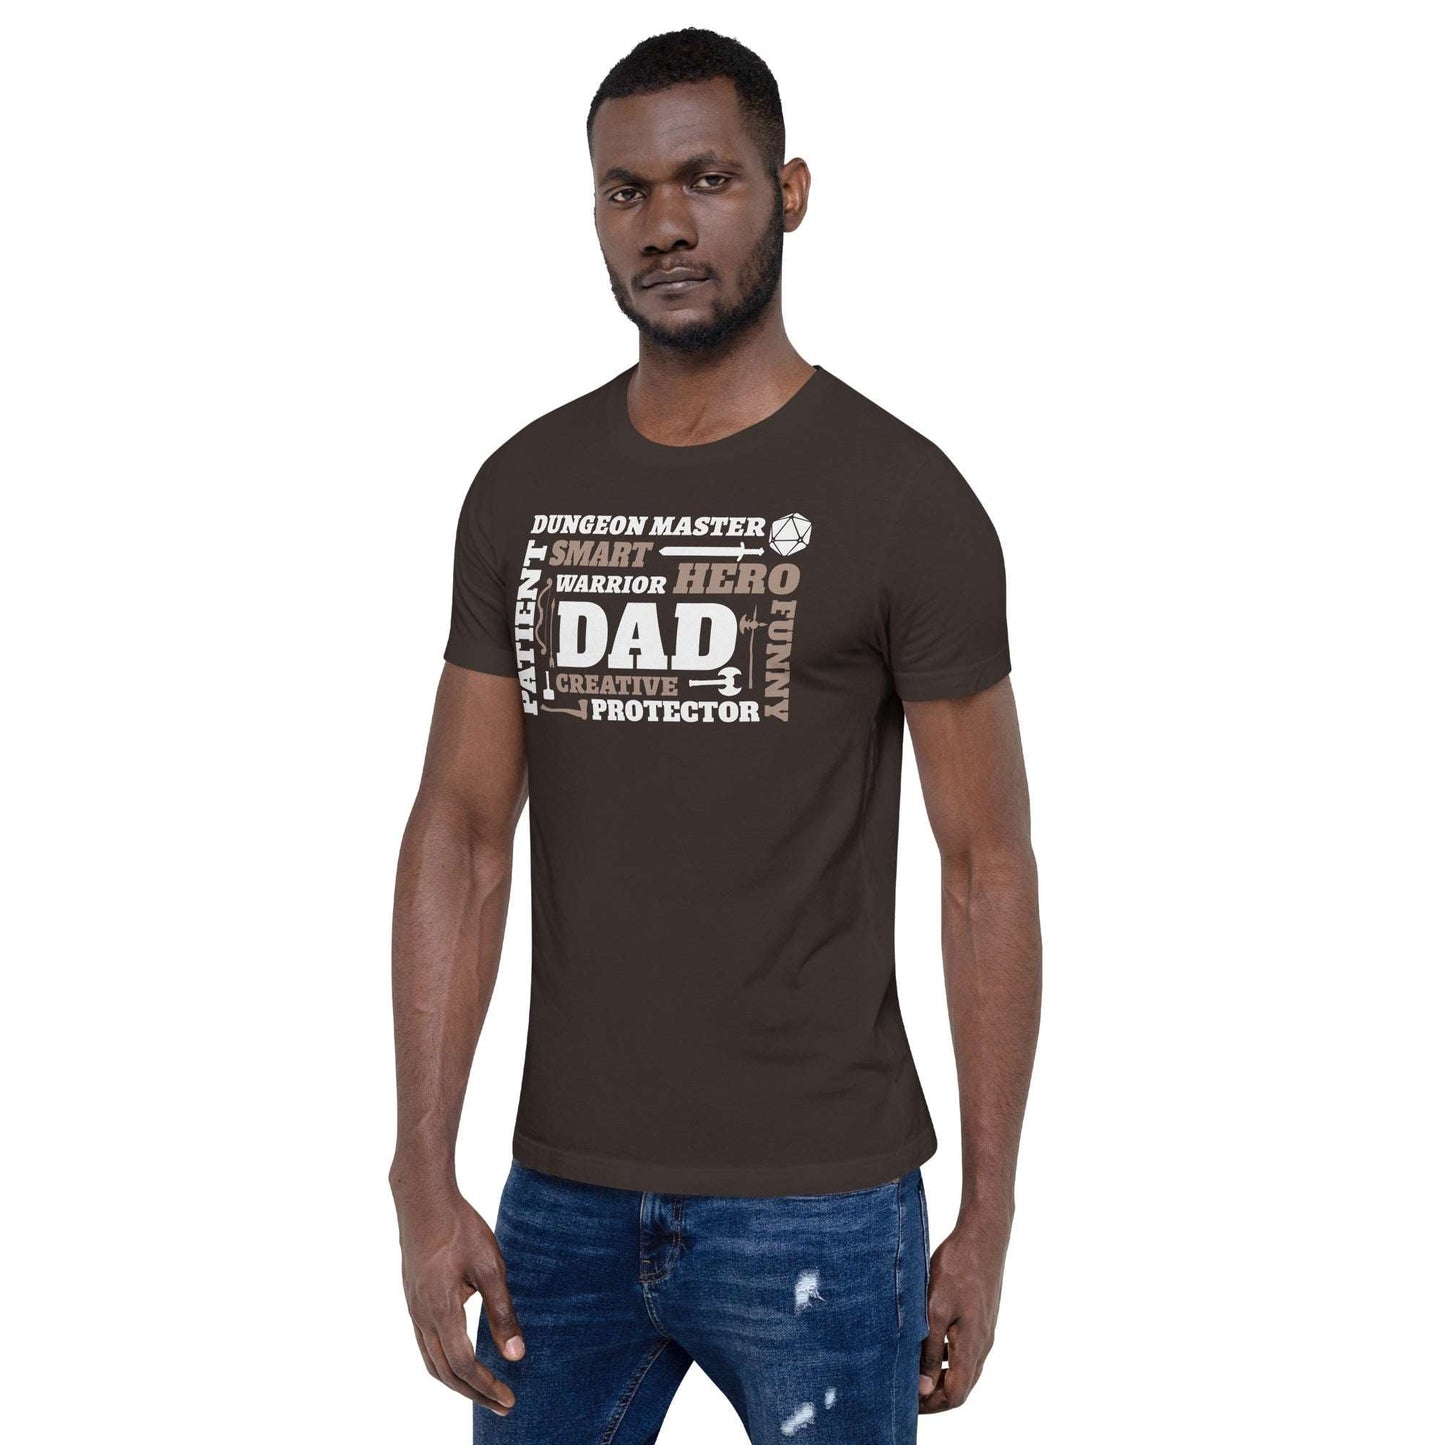 DnD Dad Adjectives Shirt Tshirt